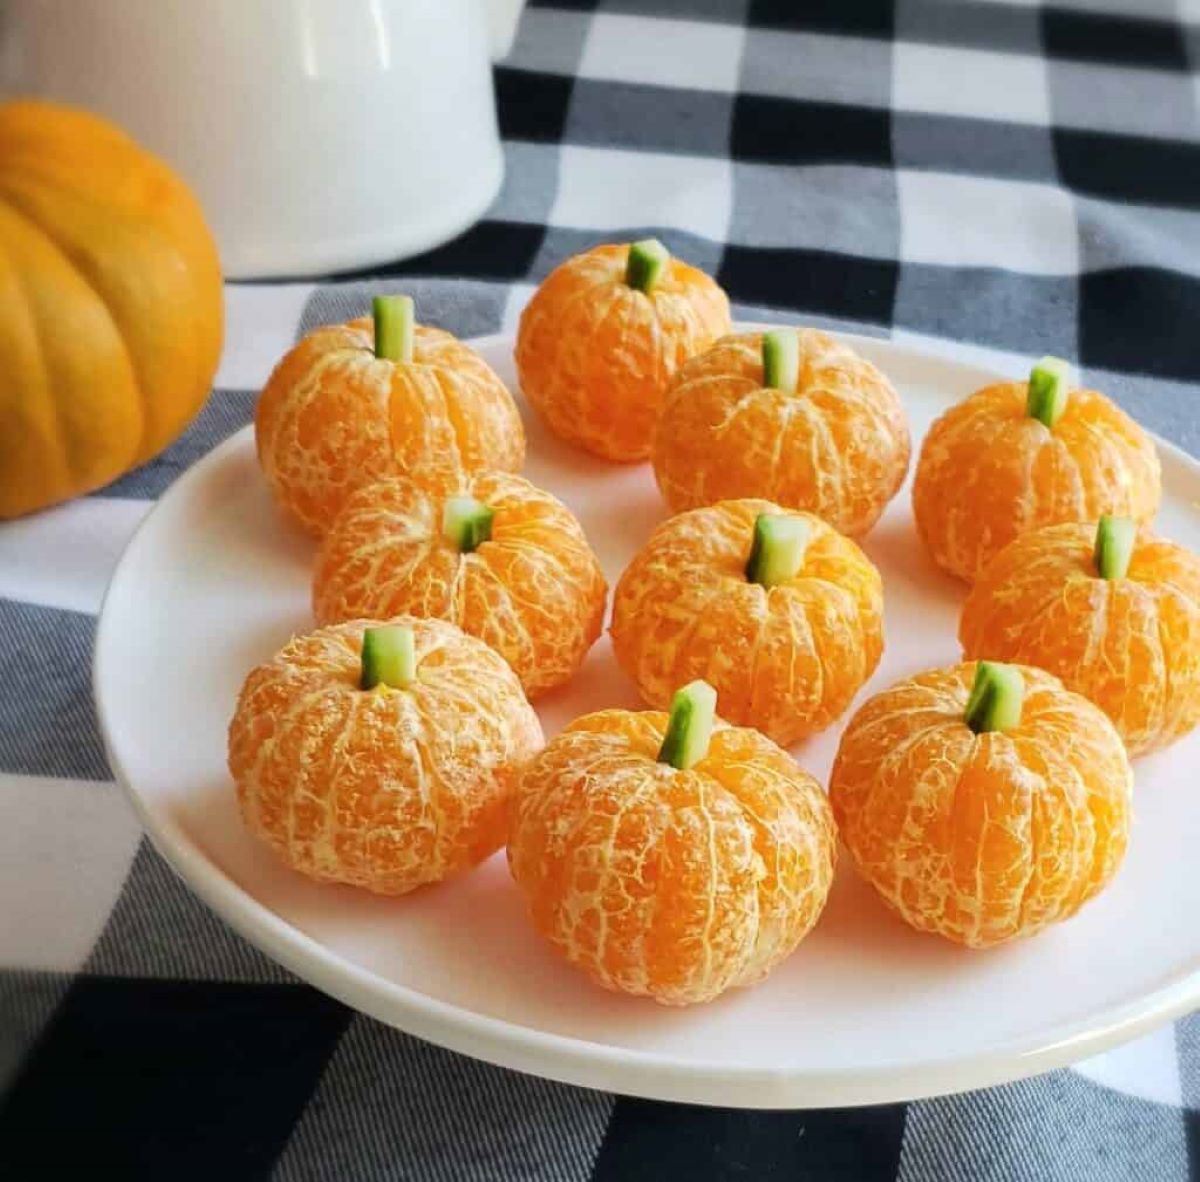 How To Store Peeled Mandarin Oranges